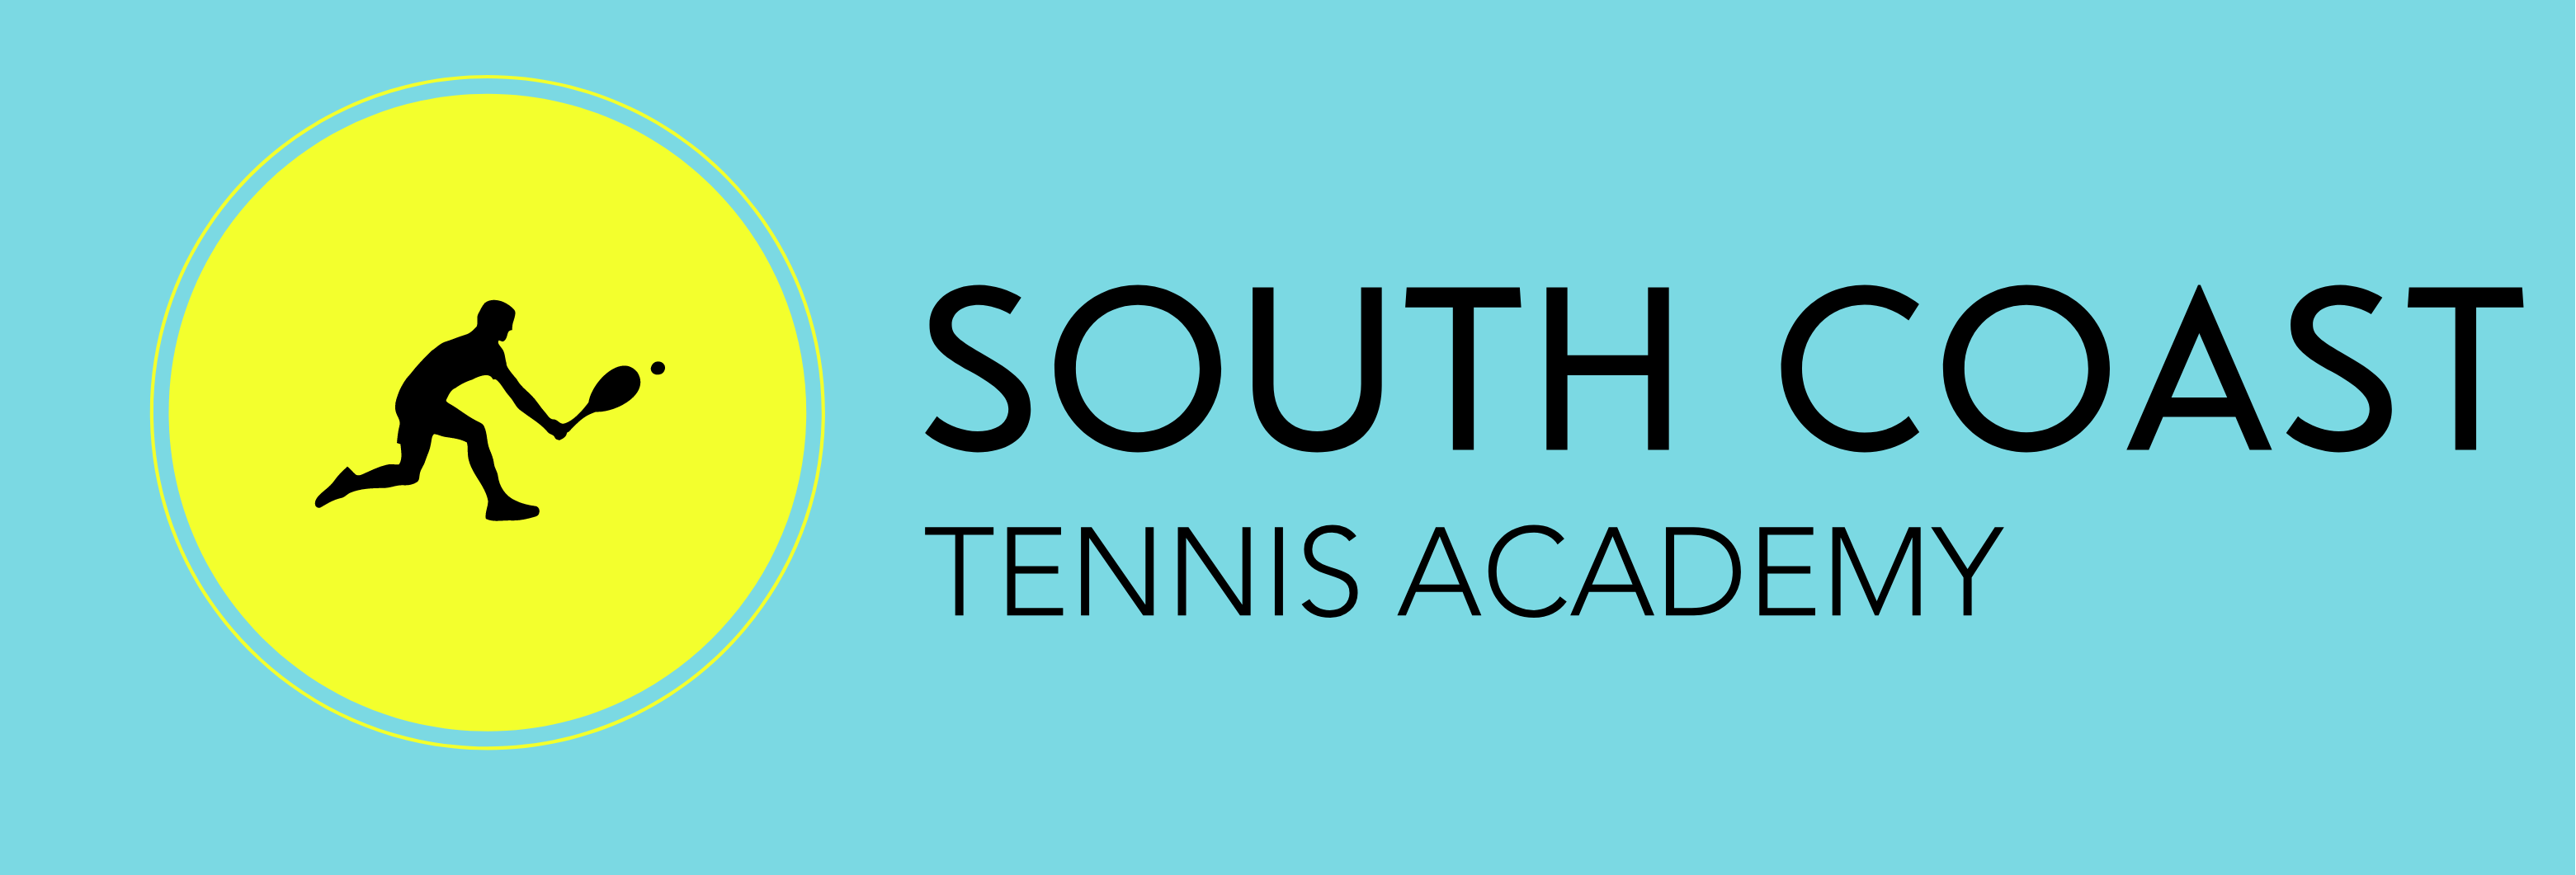 South Coast Tennis Academy